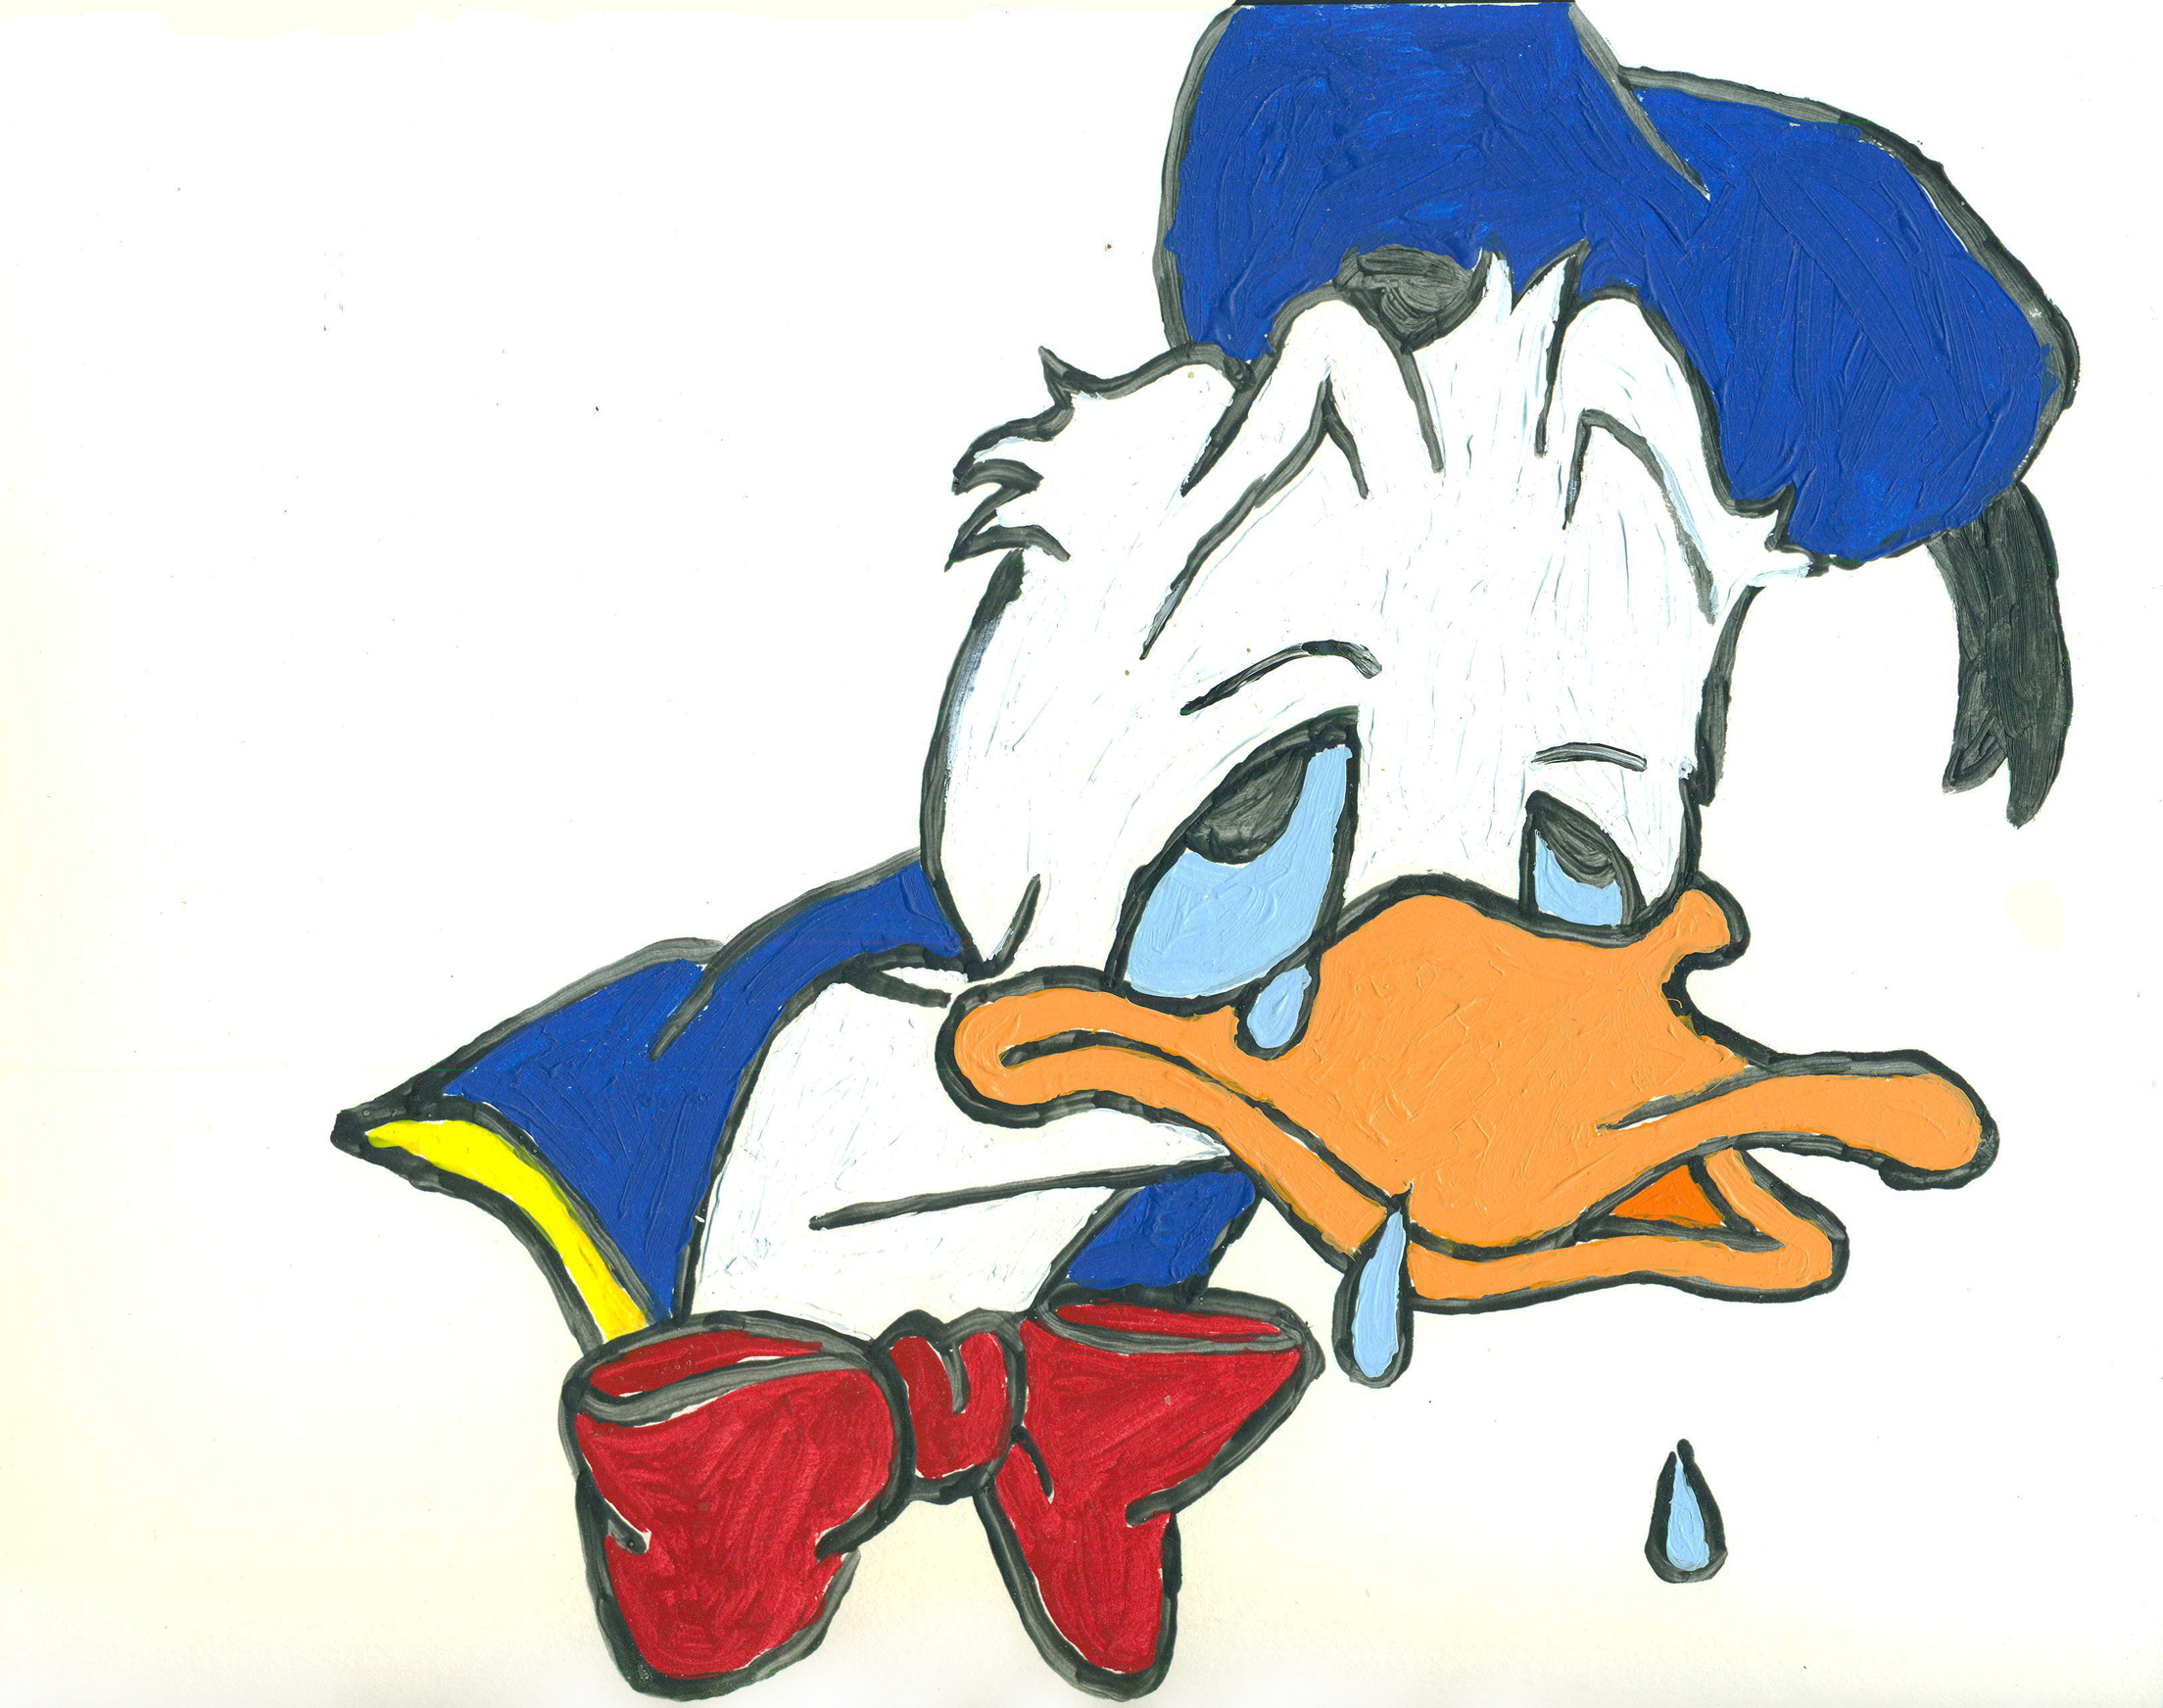 "Sad Donald" (2015)